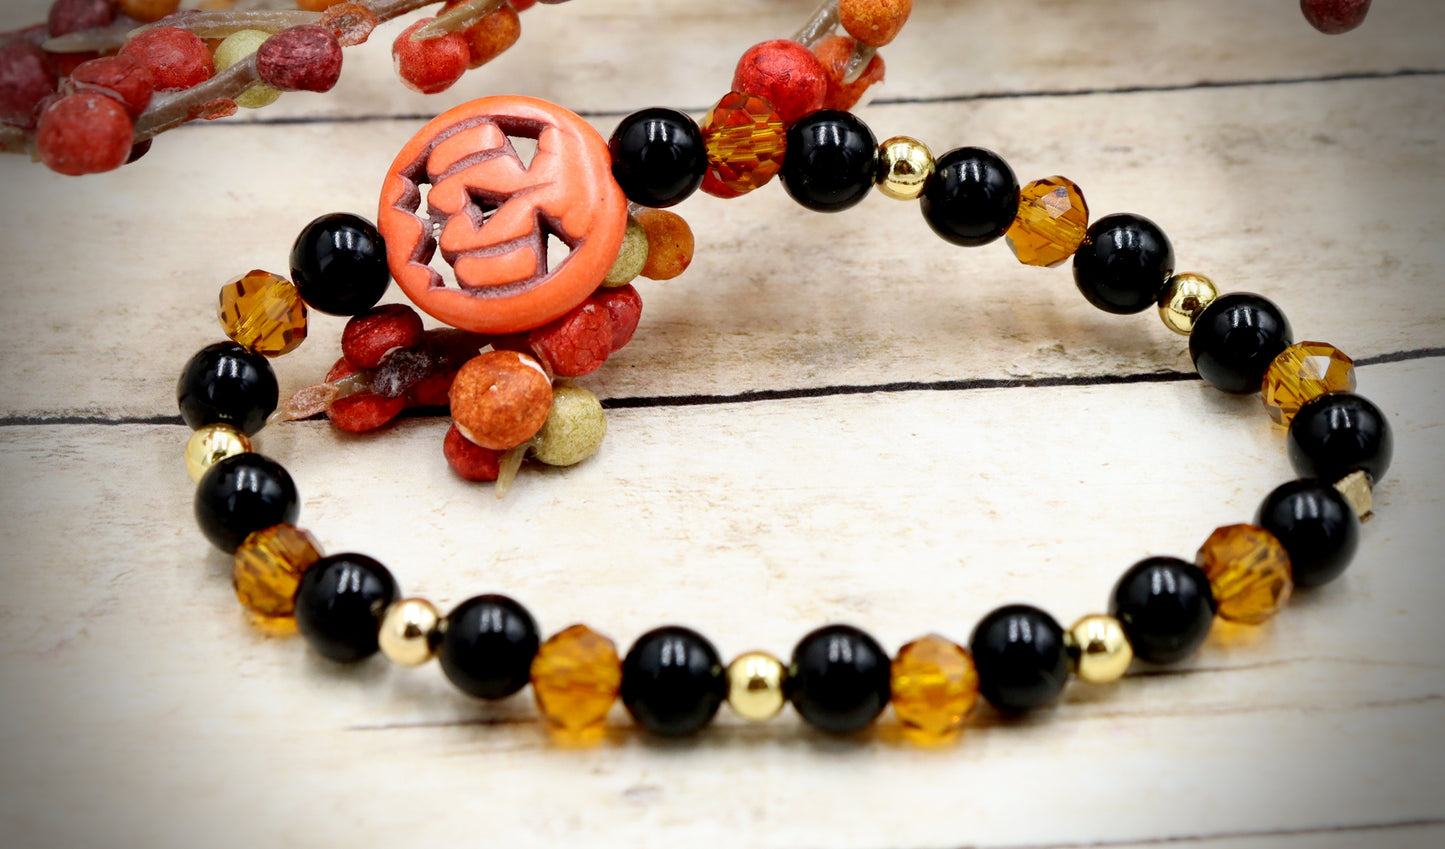 Pumpkin King Black and Gold Scream Halloween Themed Glass Bead Stretch Bracelet by Monkey's Mojo